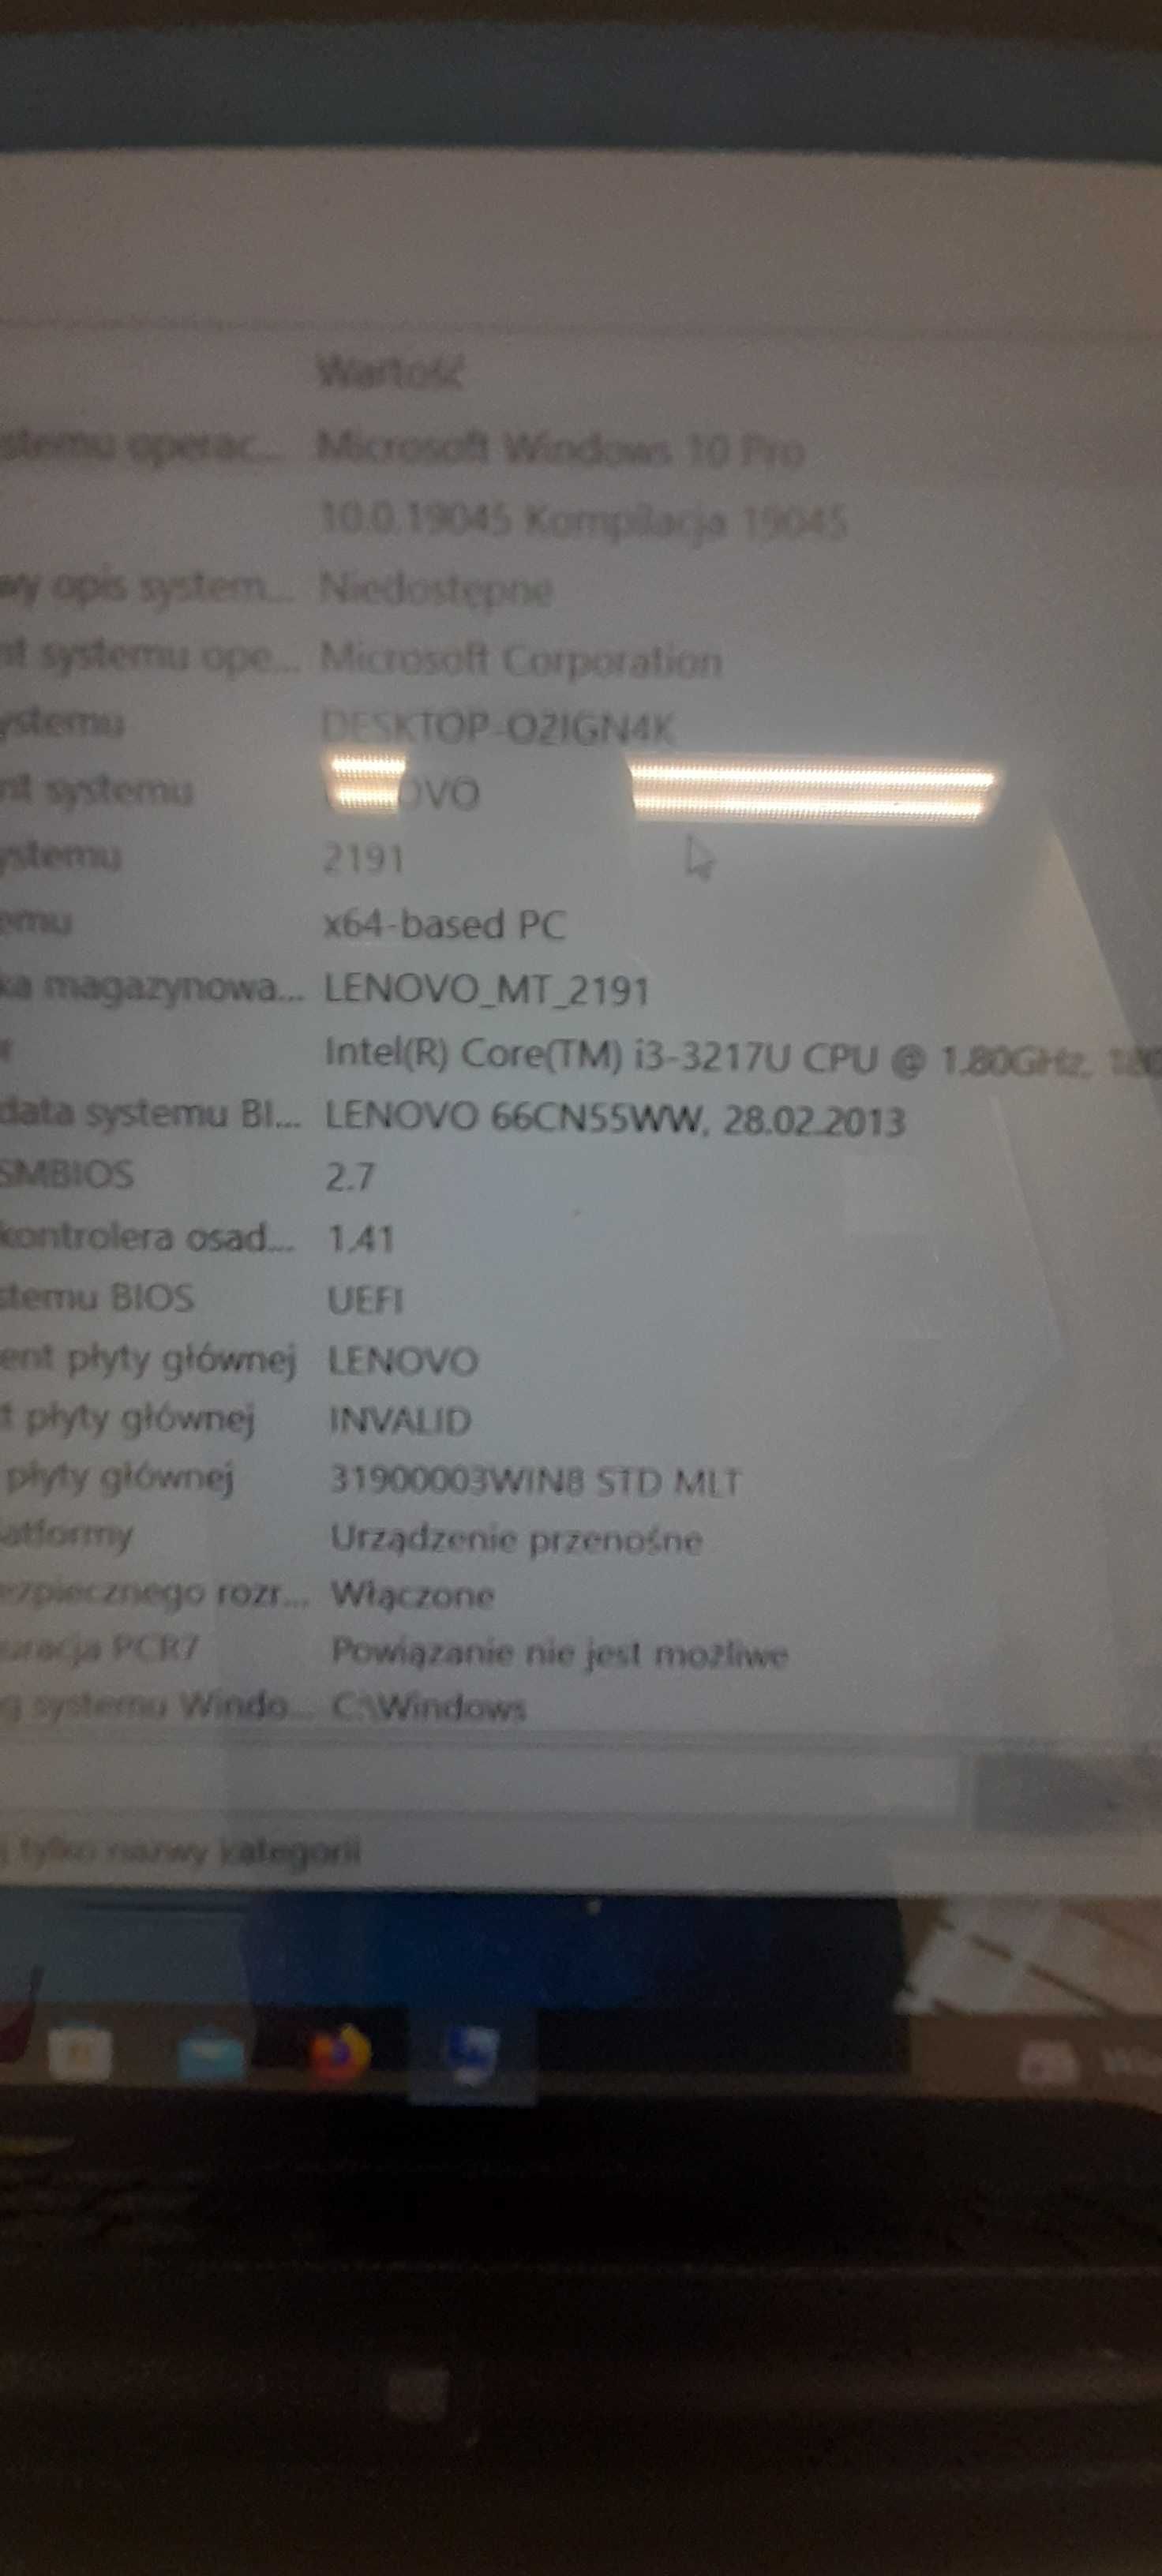 Lenovo IdeaPad Yoga 13 2w1 typ 2191